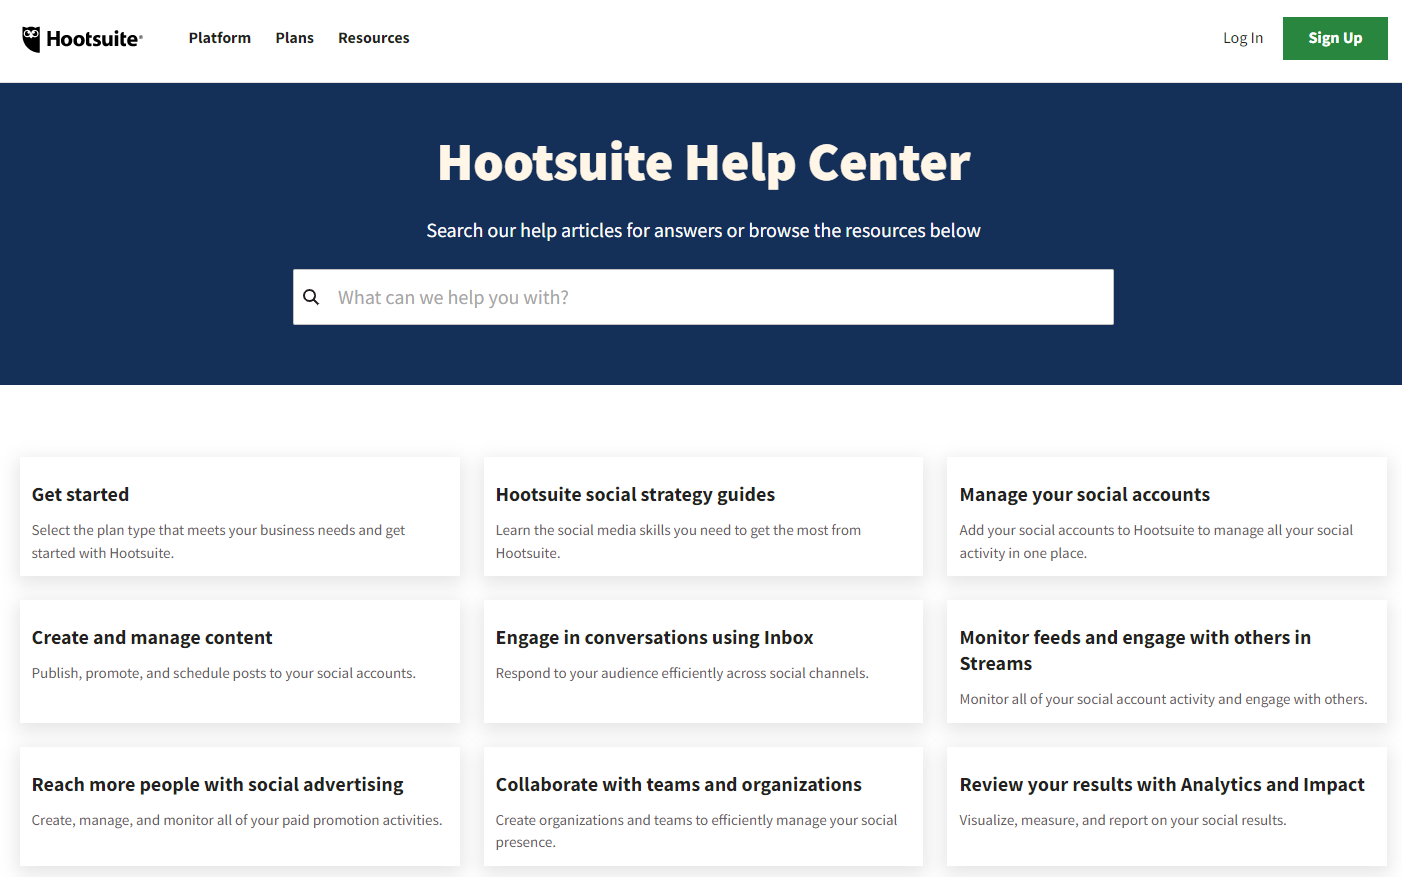 Hootsuite Help Center